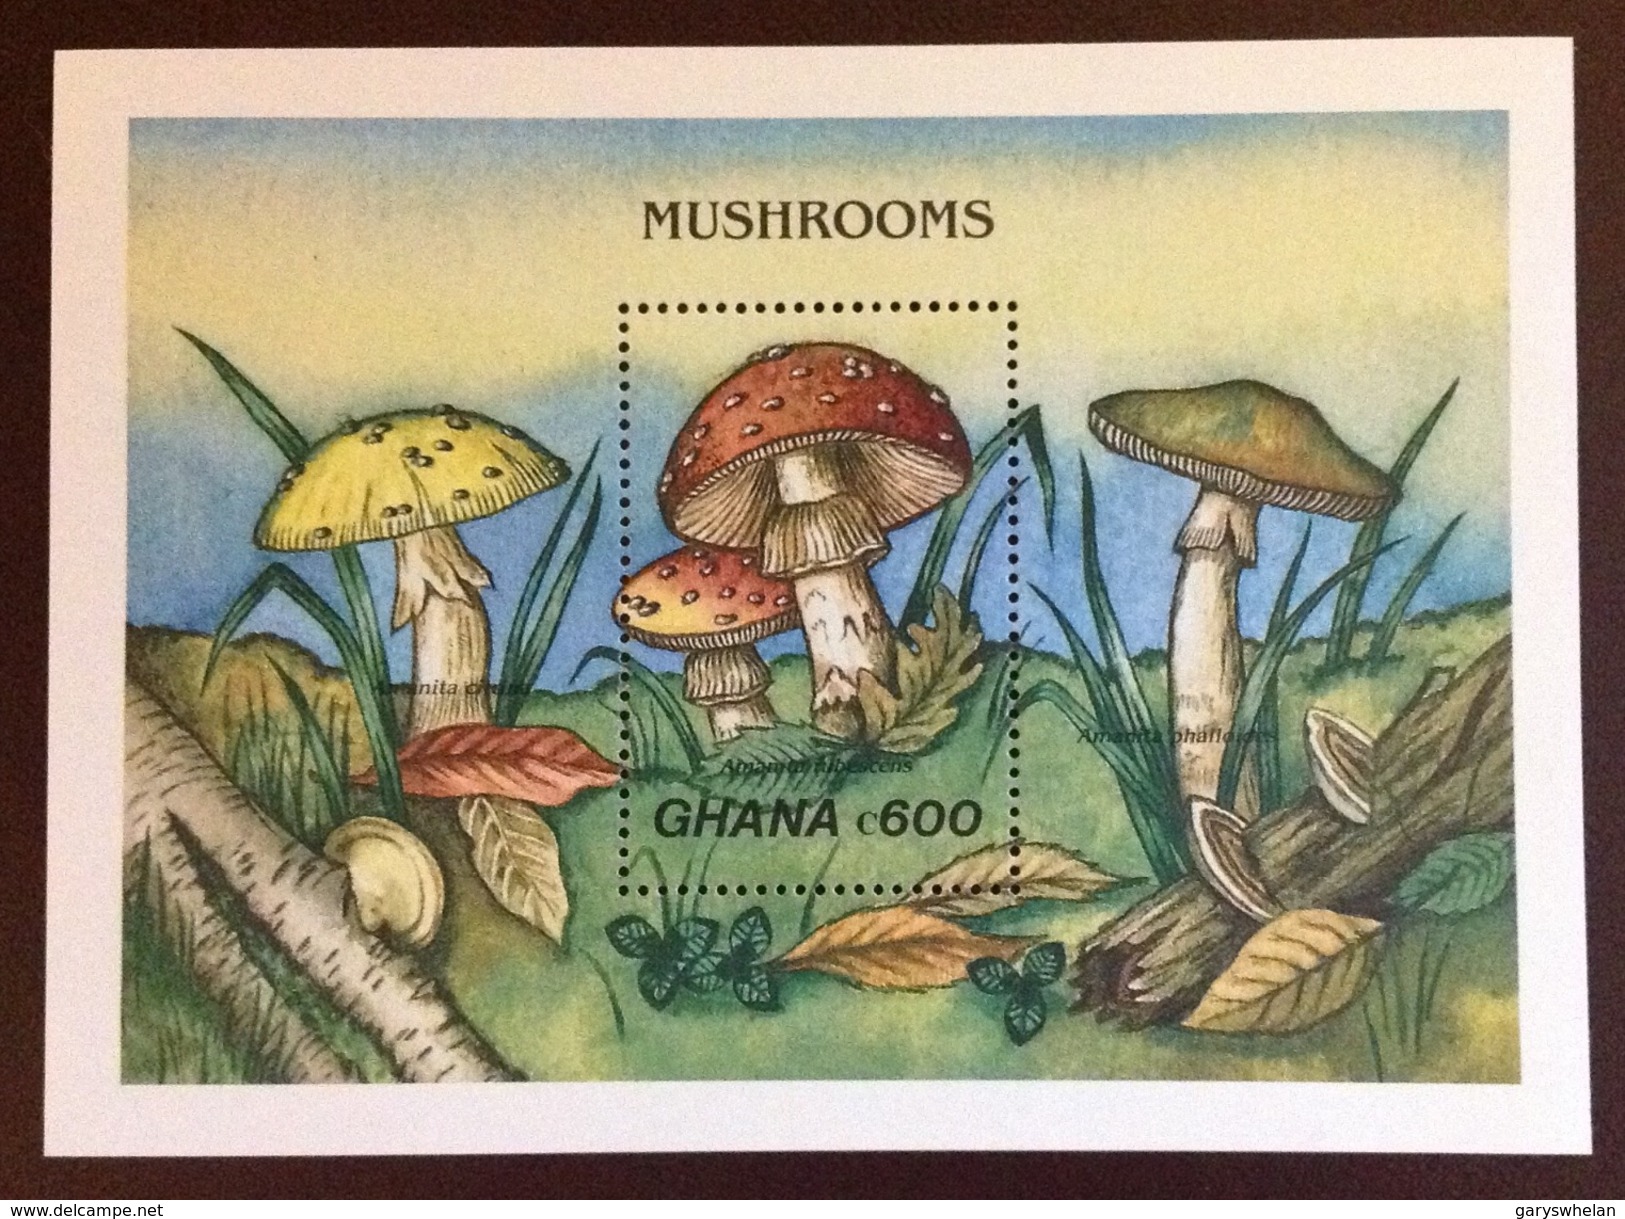 Ghana 1989 Mushrooms Minisheet MNH - Pilze